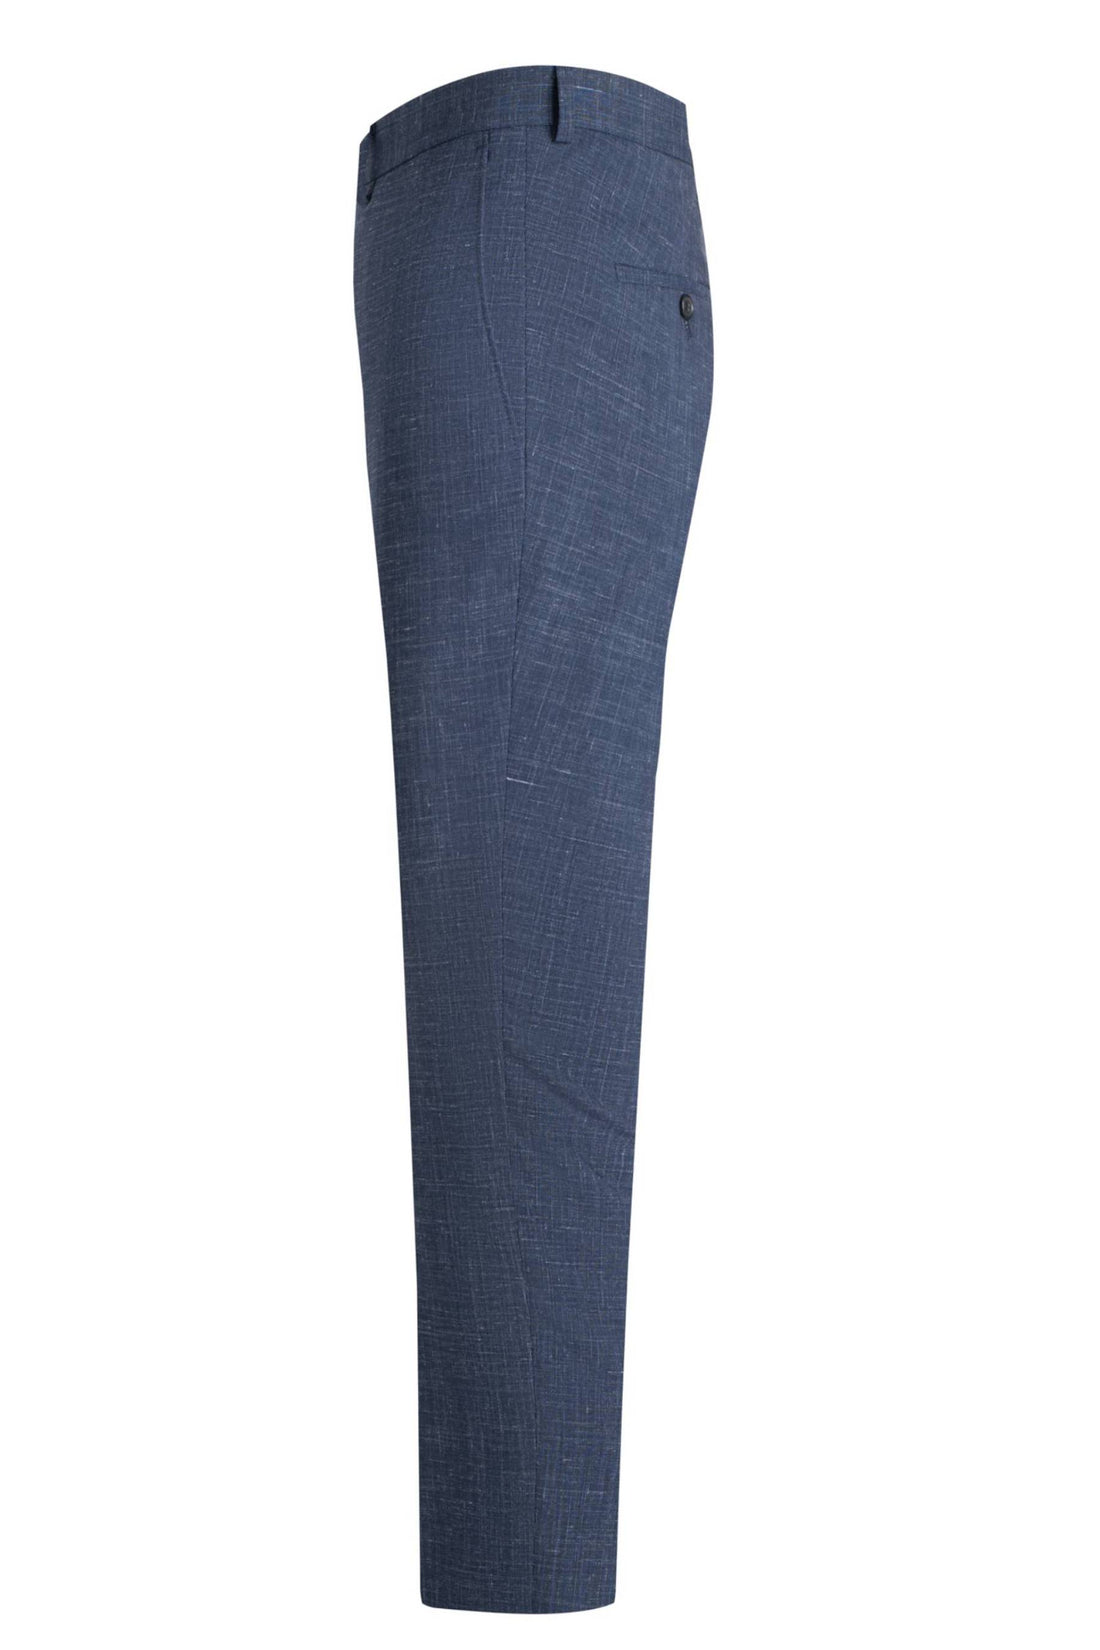 Samuelsohn Blue Wool Linen Stretch Suit Side Pant